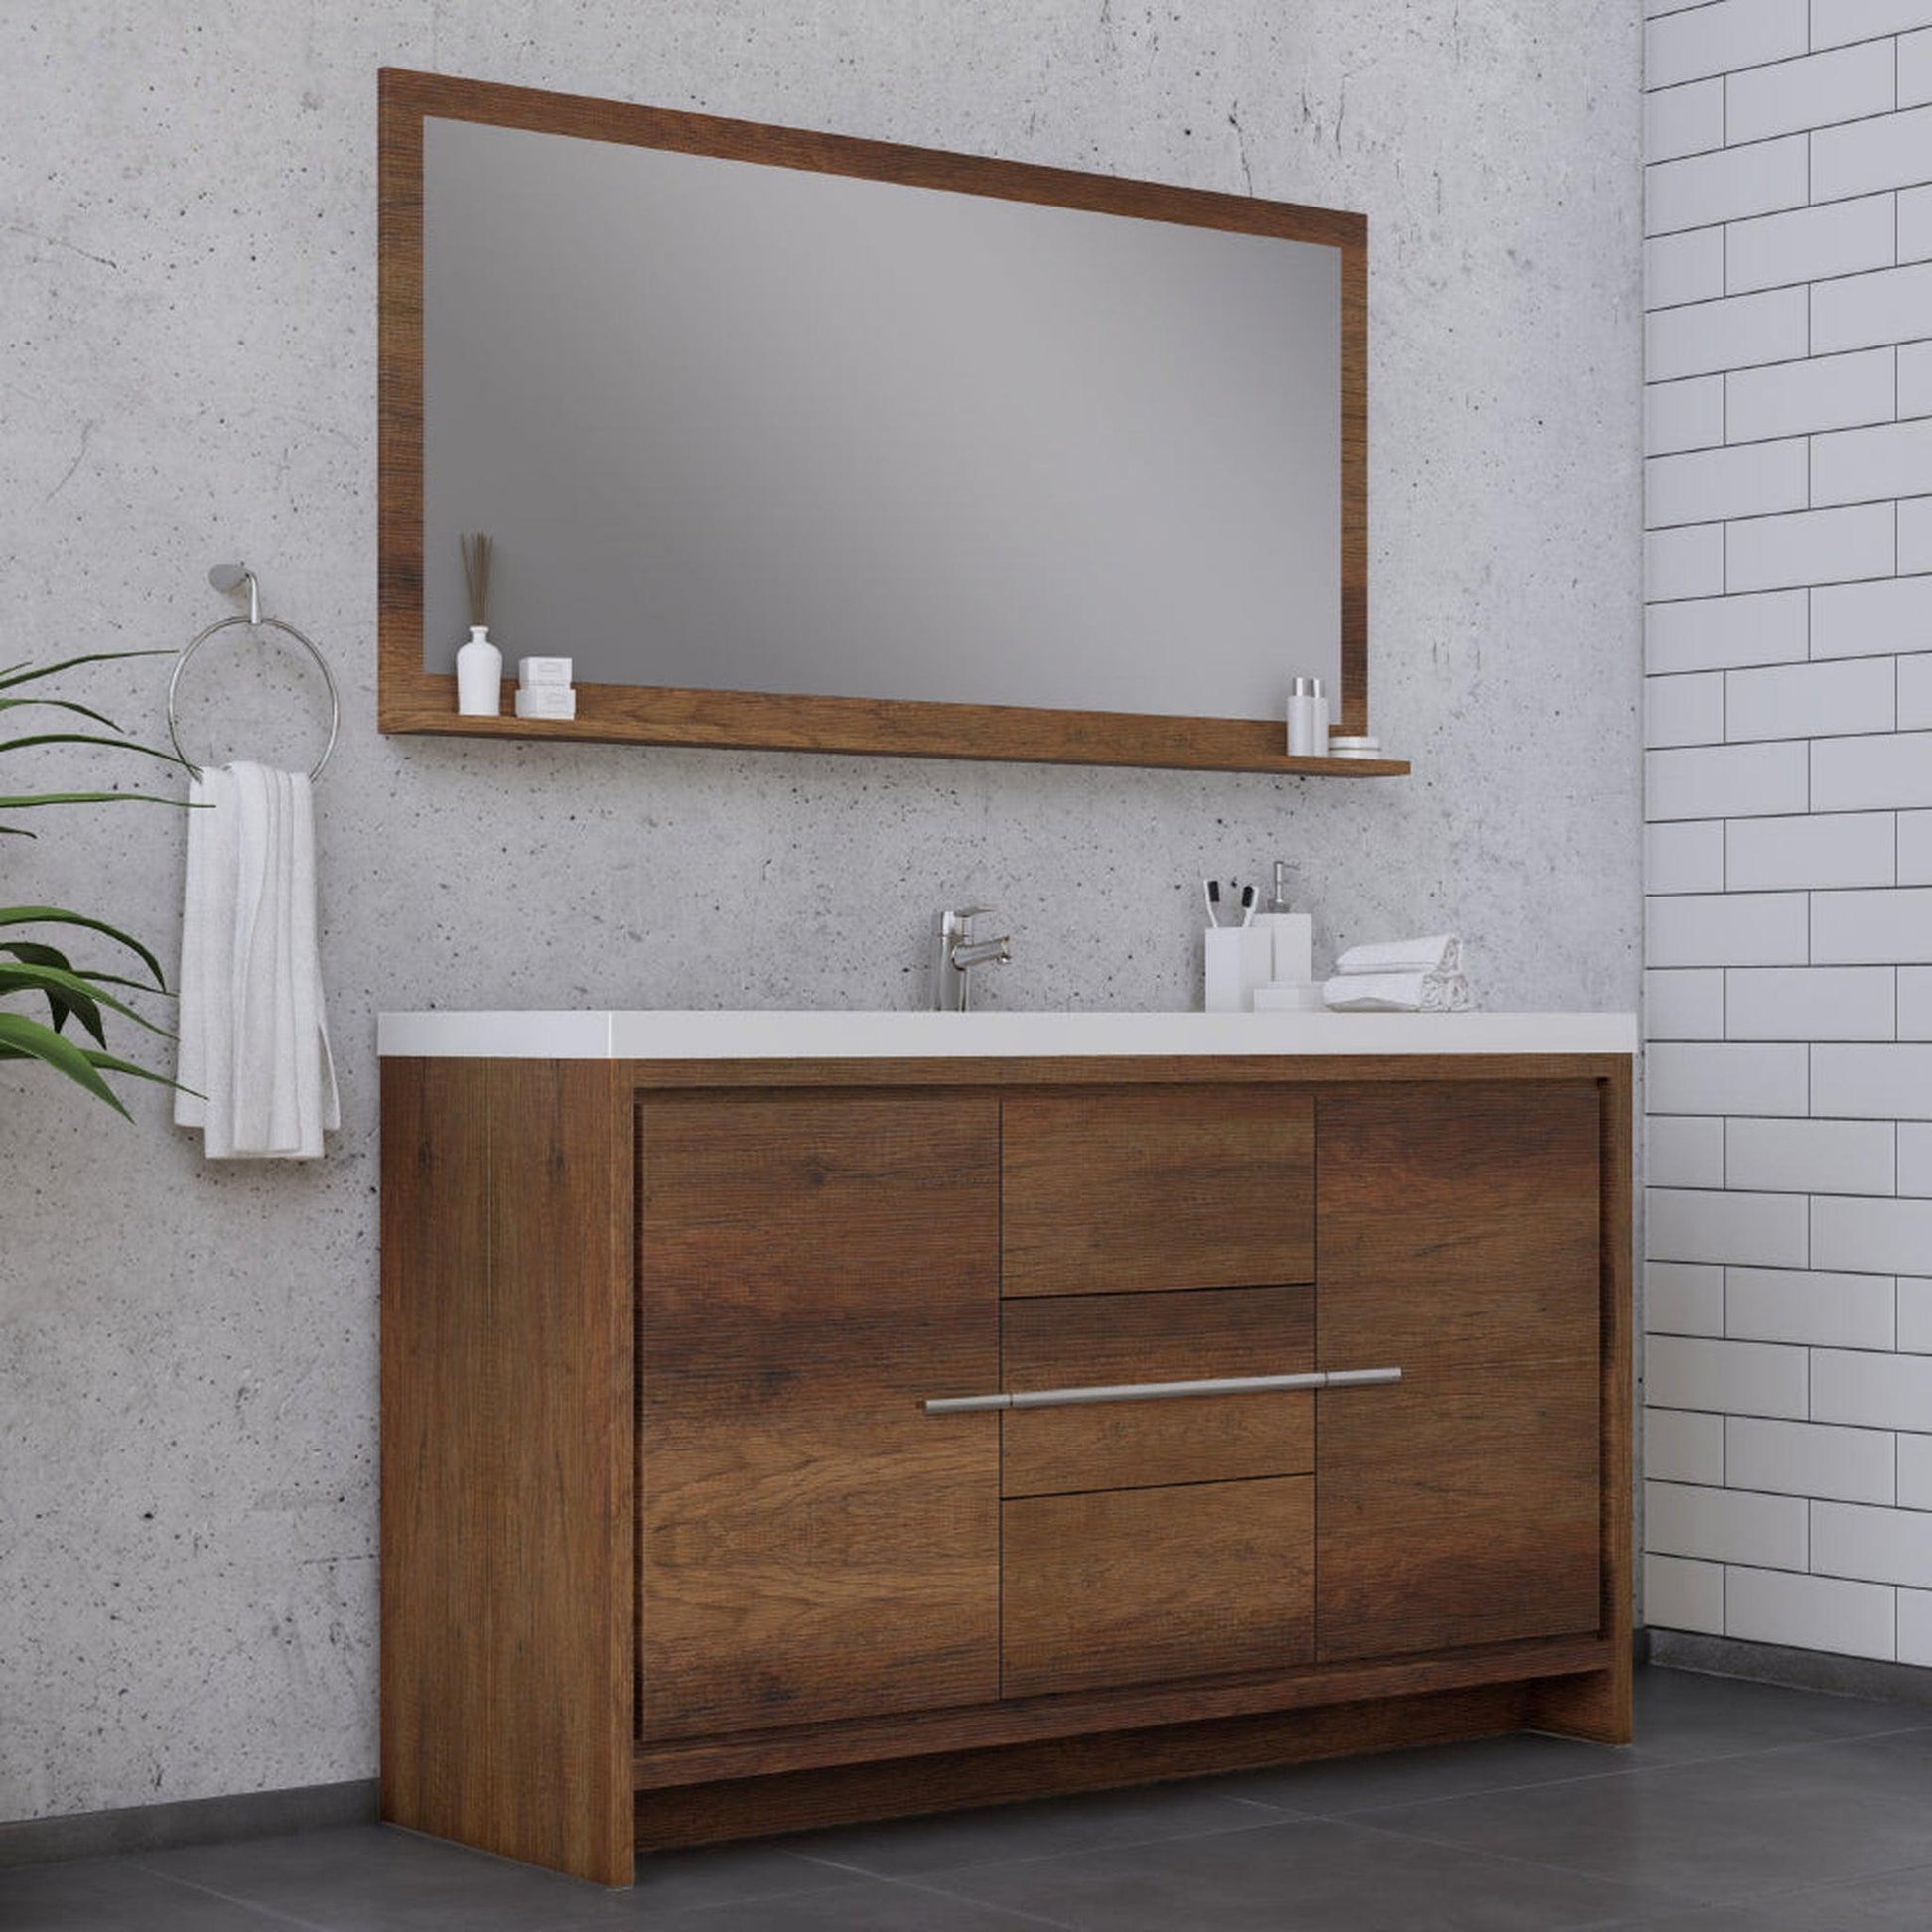 Alya Bath Sortino 60" Single Rosewood Modern Freestanding Bathroom Vanity With Acrylic Top and Integrated Sink